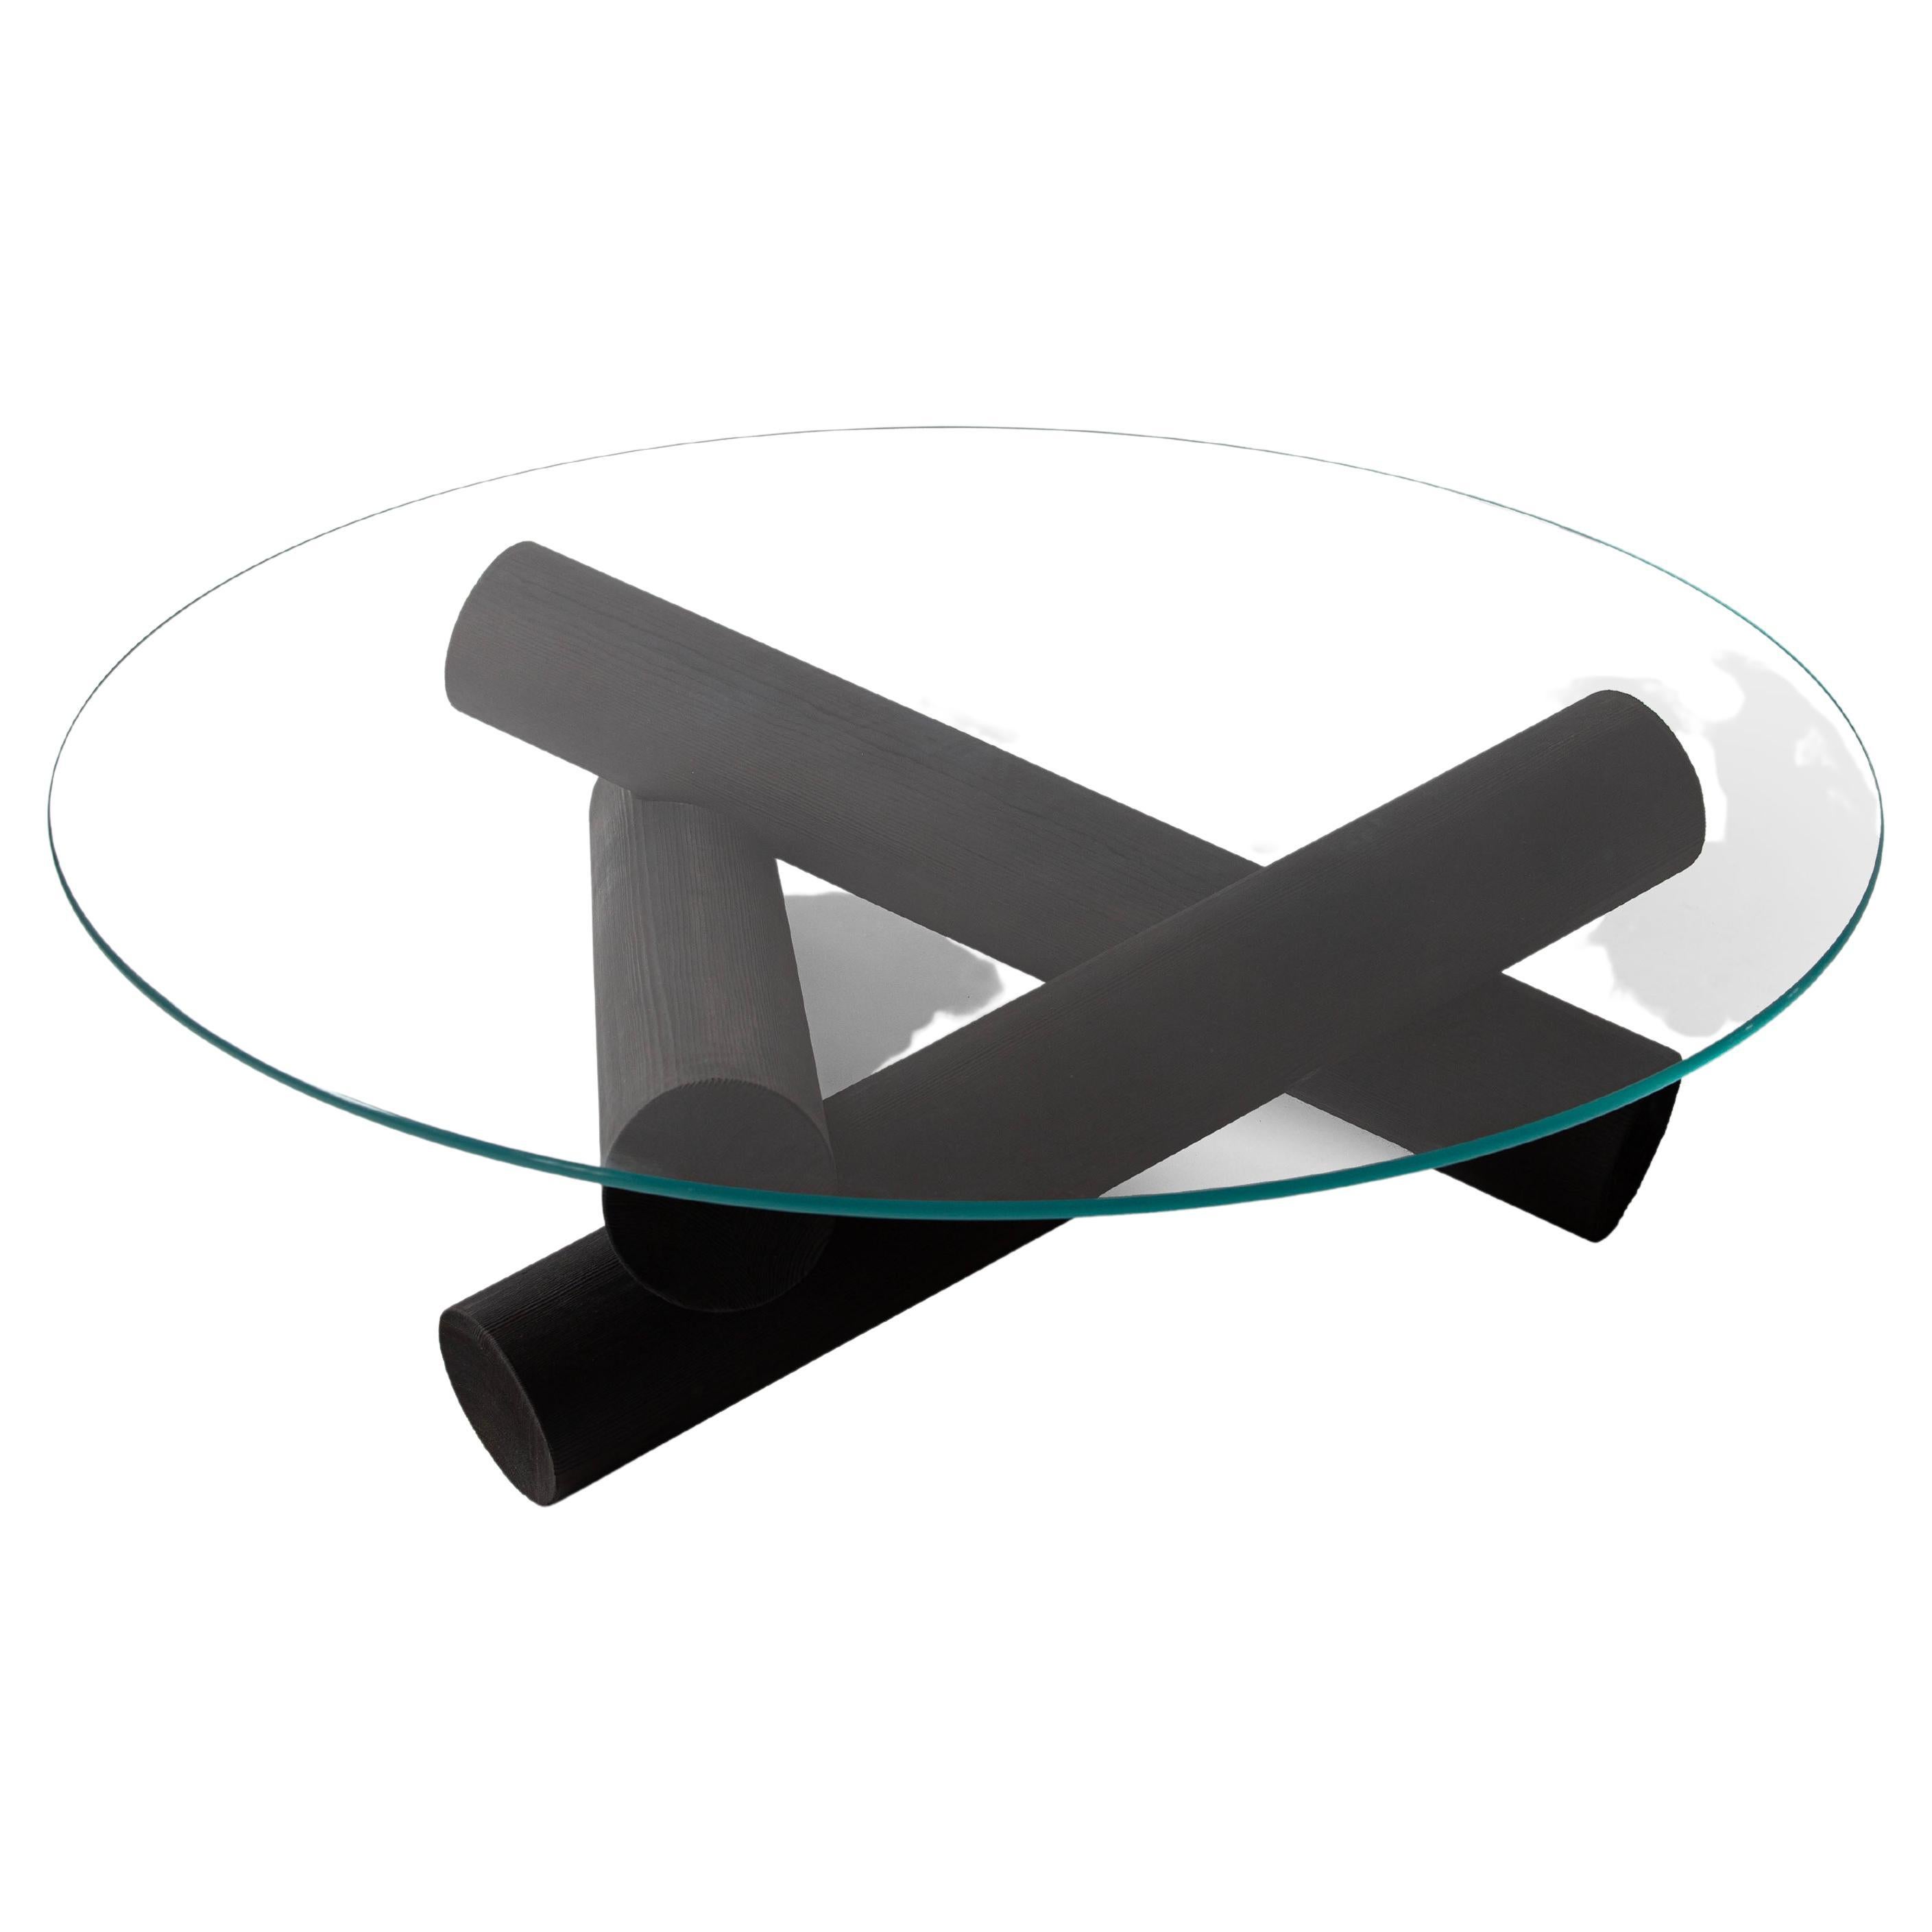 Bon Coffee Table from Ringvide, Black Oil, Transparent Glass Top, Scandinavian